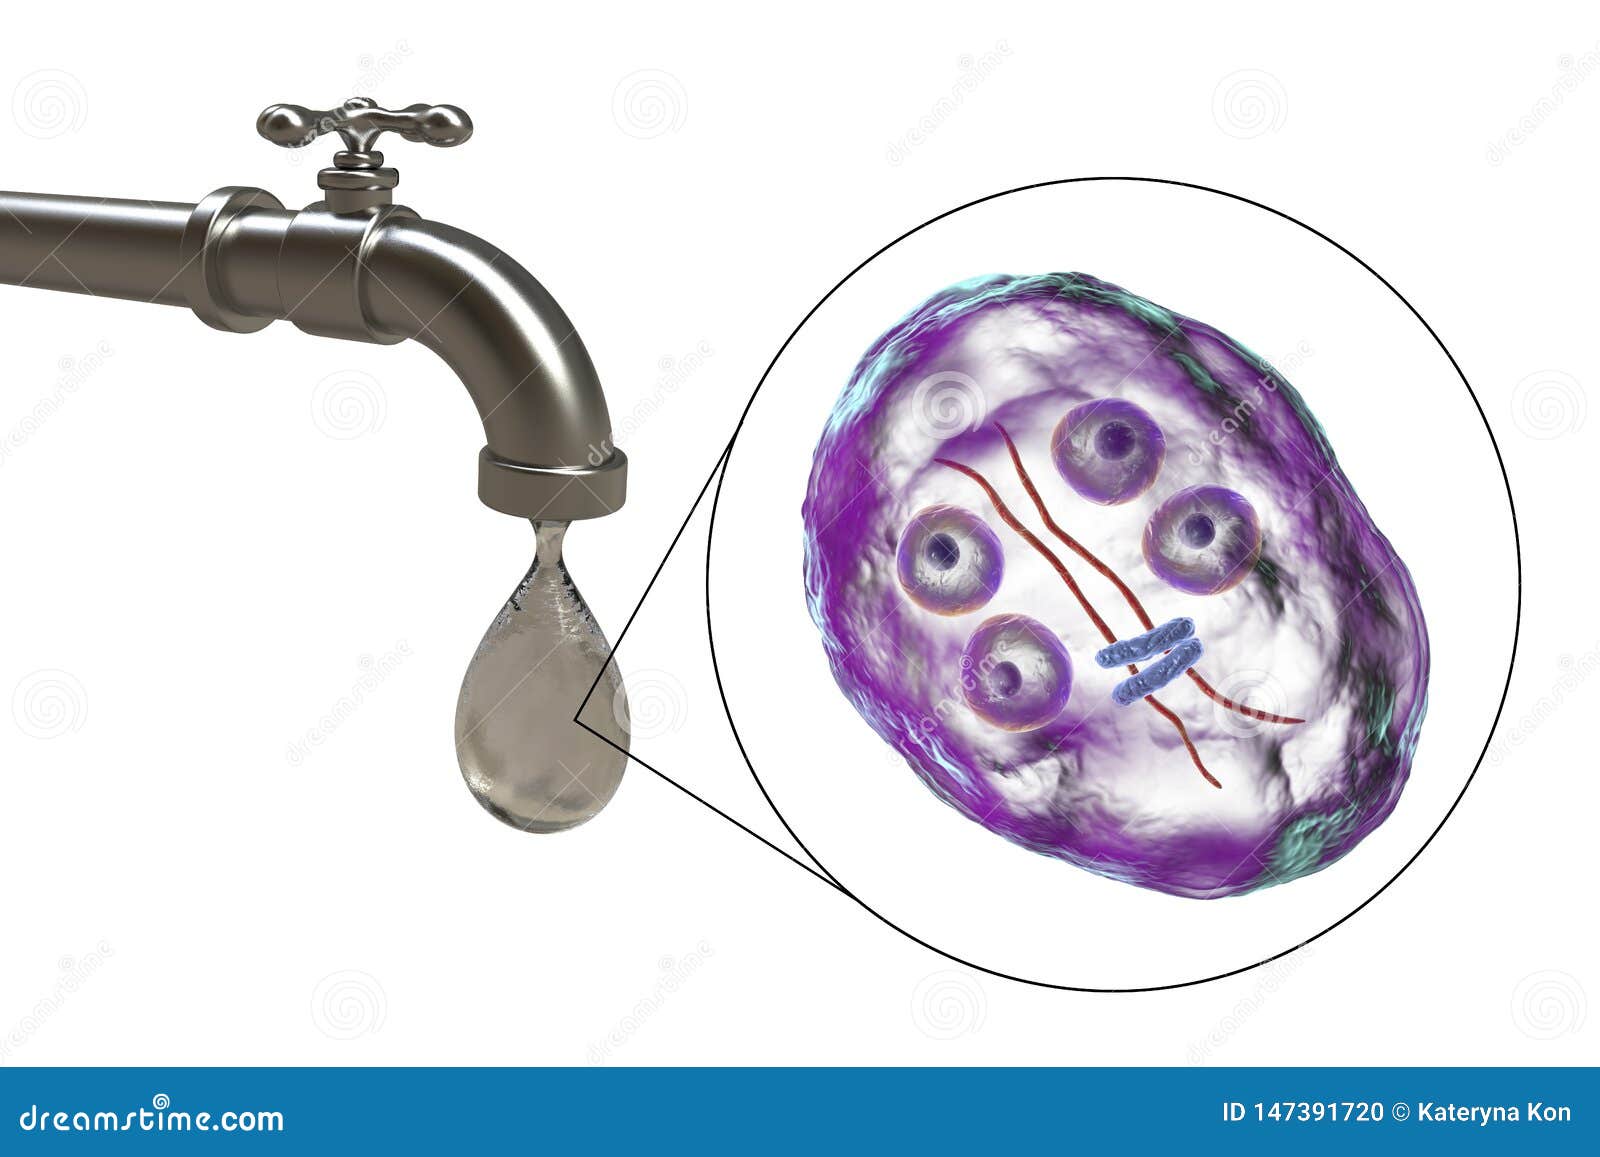 [Cryptosporidium and Giardia as water contaminant pathogens in Hungary]. Giardia cysts in water